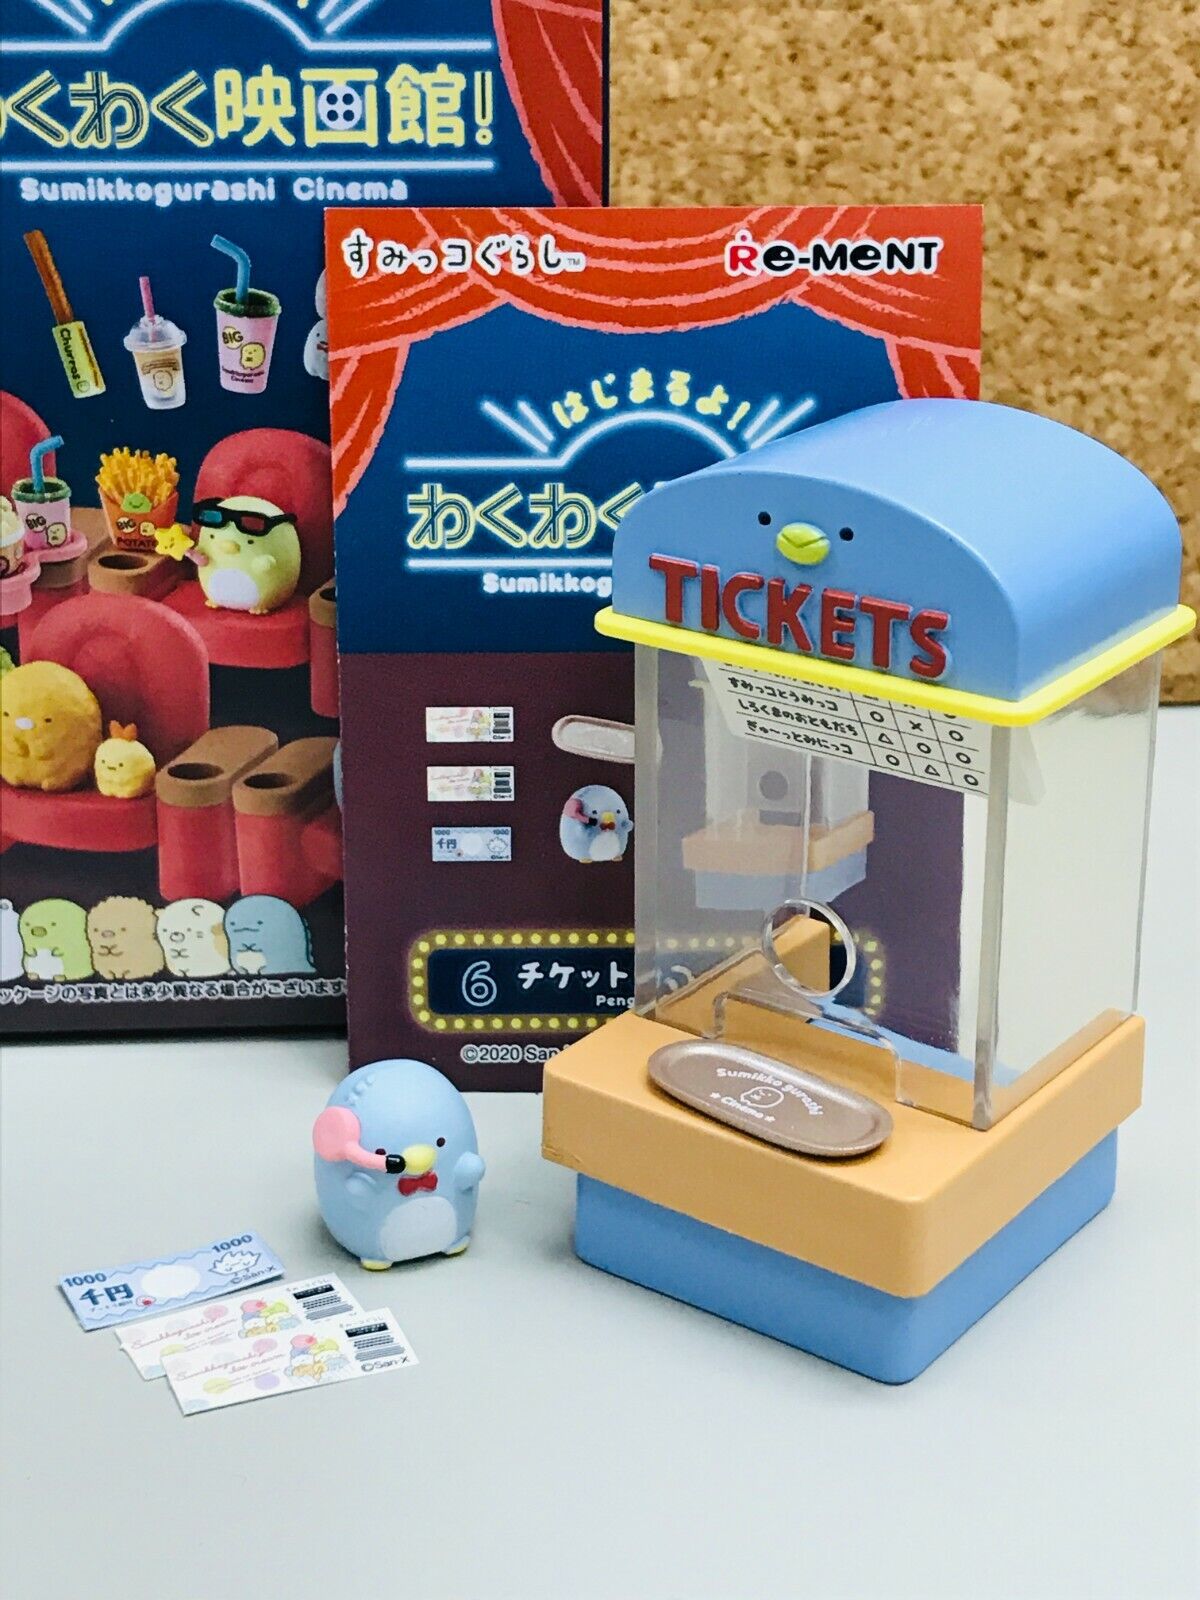 Re-ment San-X Sumikko Gurashi [6.Penguin Real ] Cinema Toy Figure Ticket